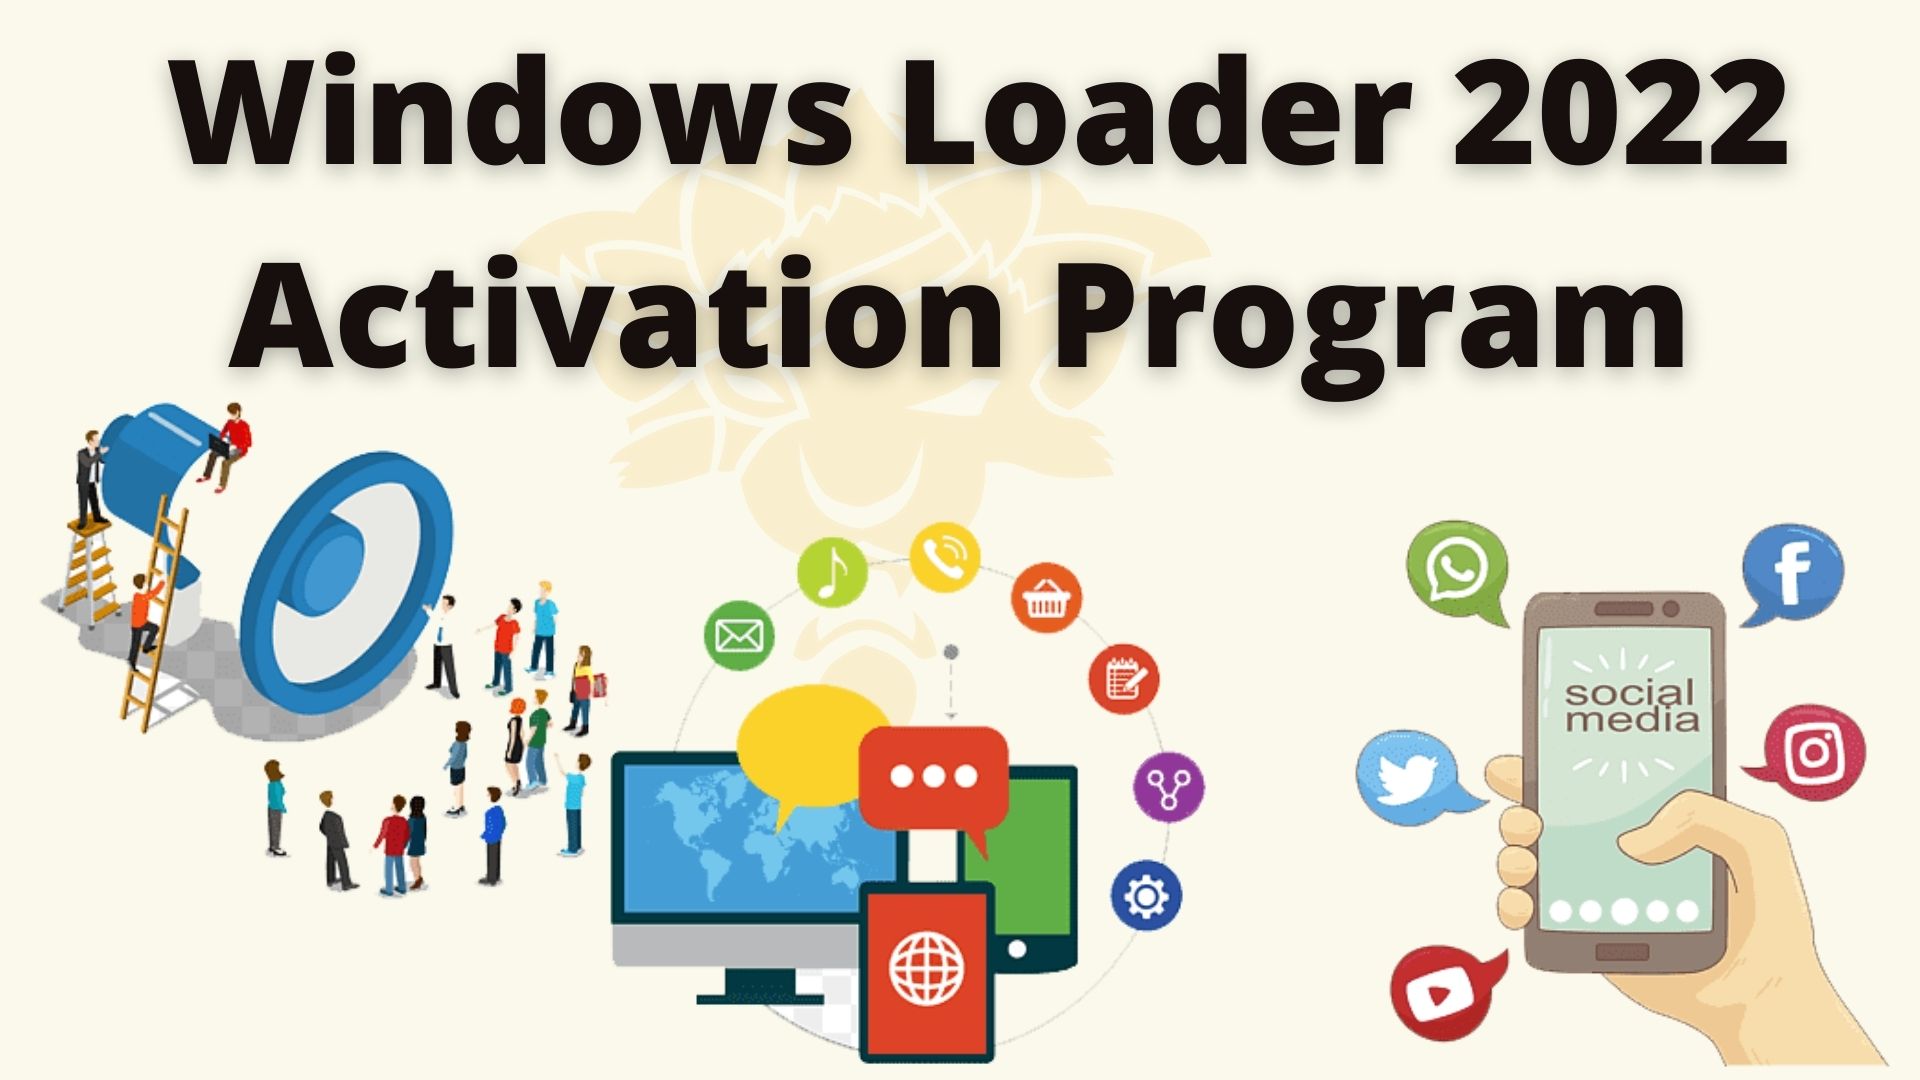 &Nbsp;Windows Loader 2022 Activation Program